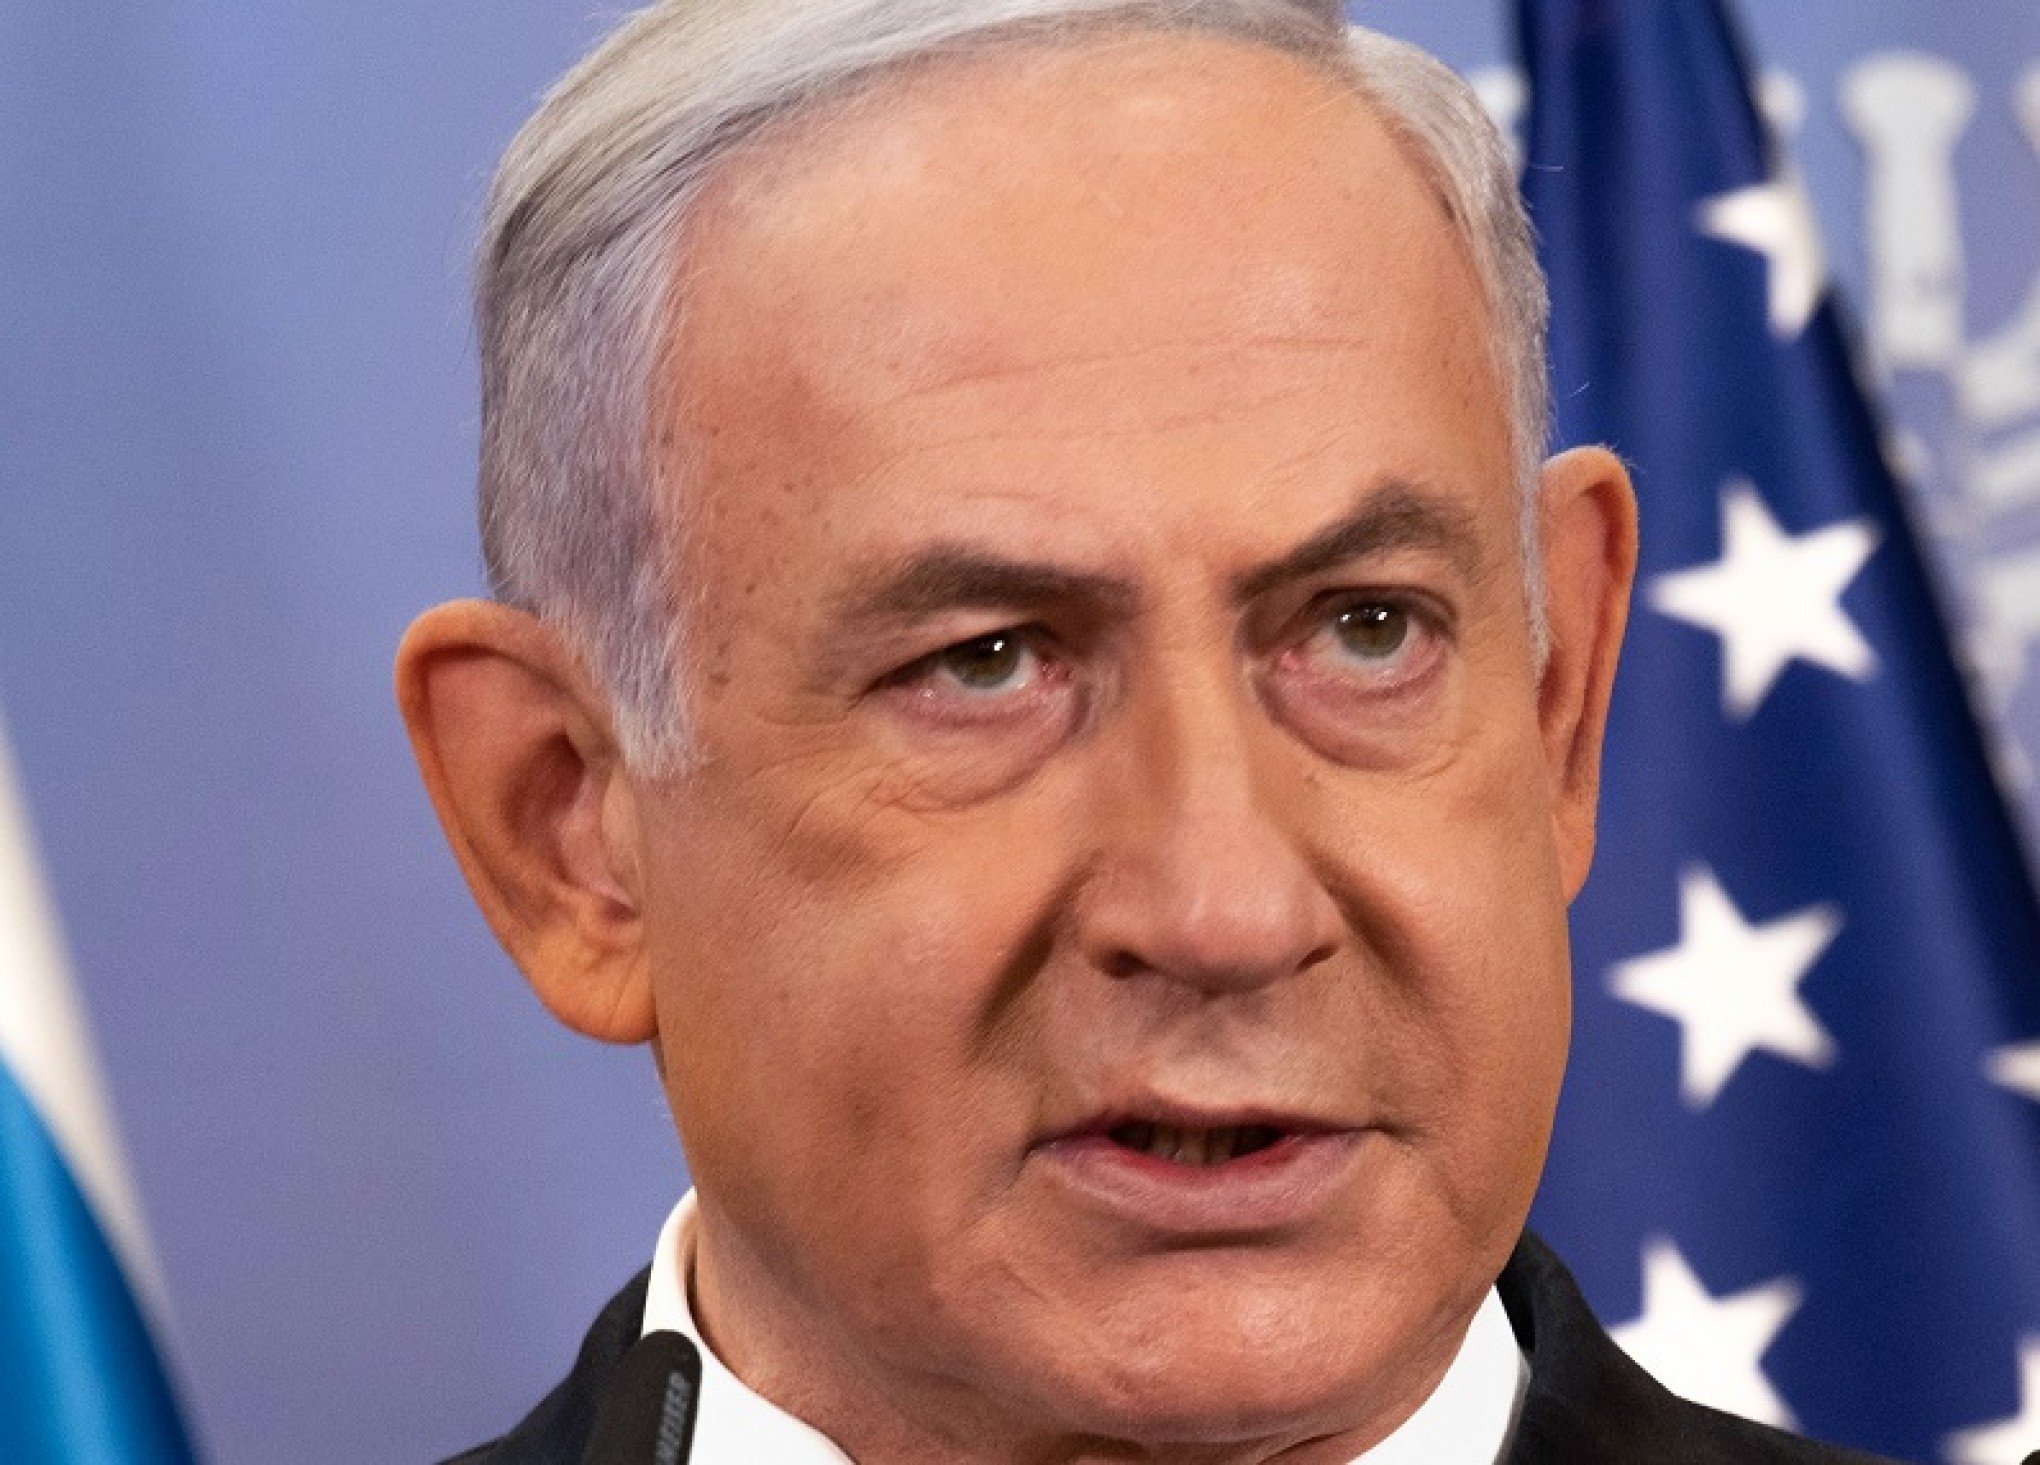 Netanyahu dissolve gabinete de guerra em Israel